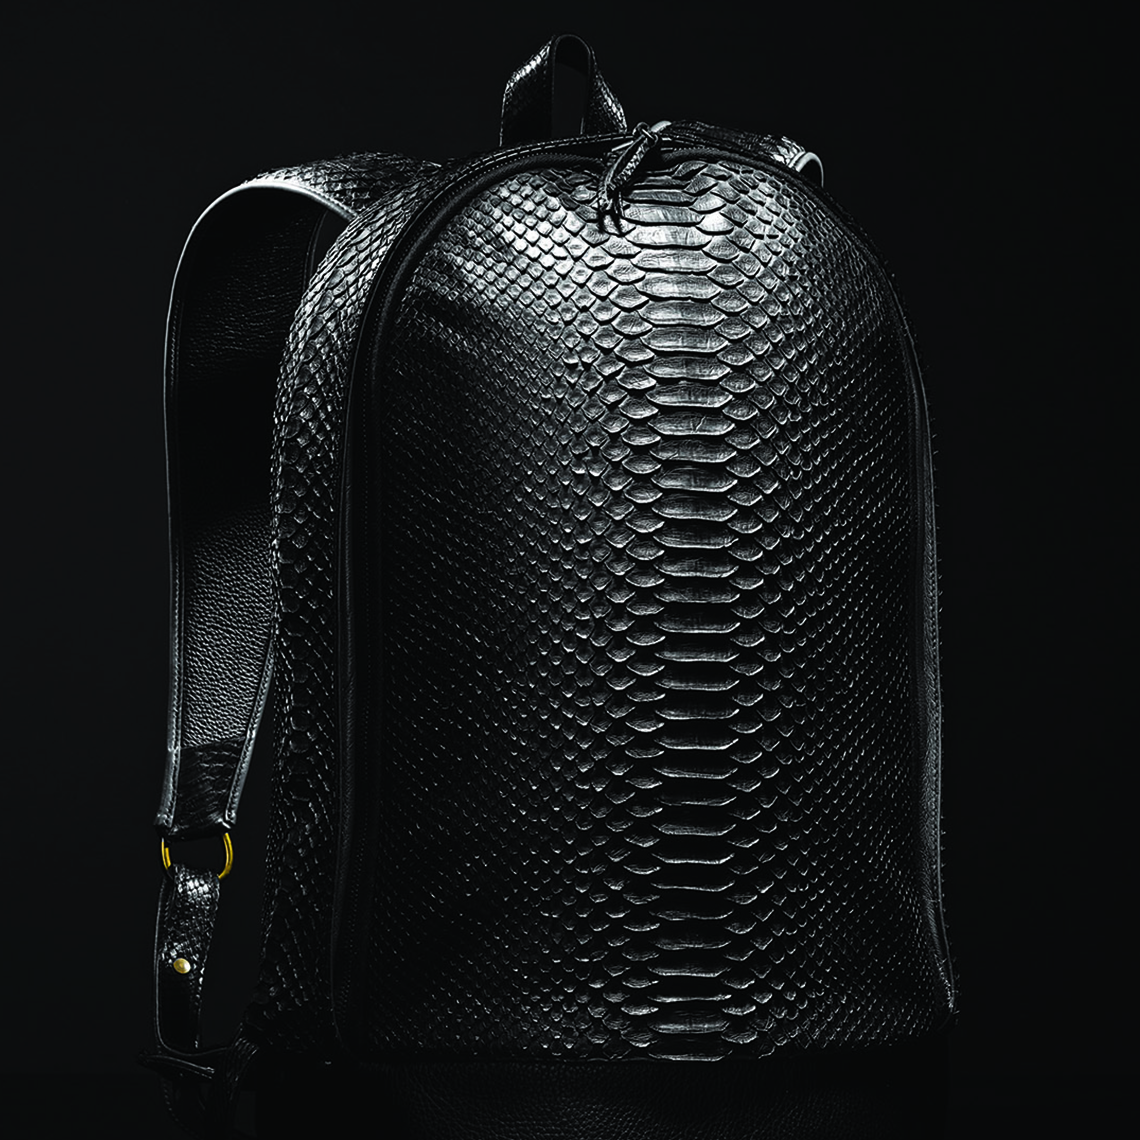 Bodega Black Ops Backpack by Joel Storella